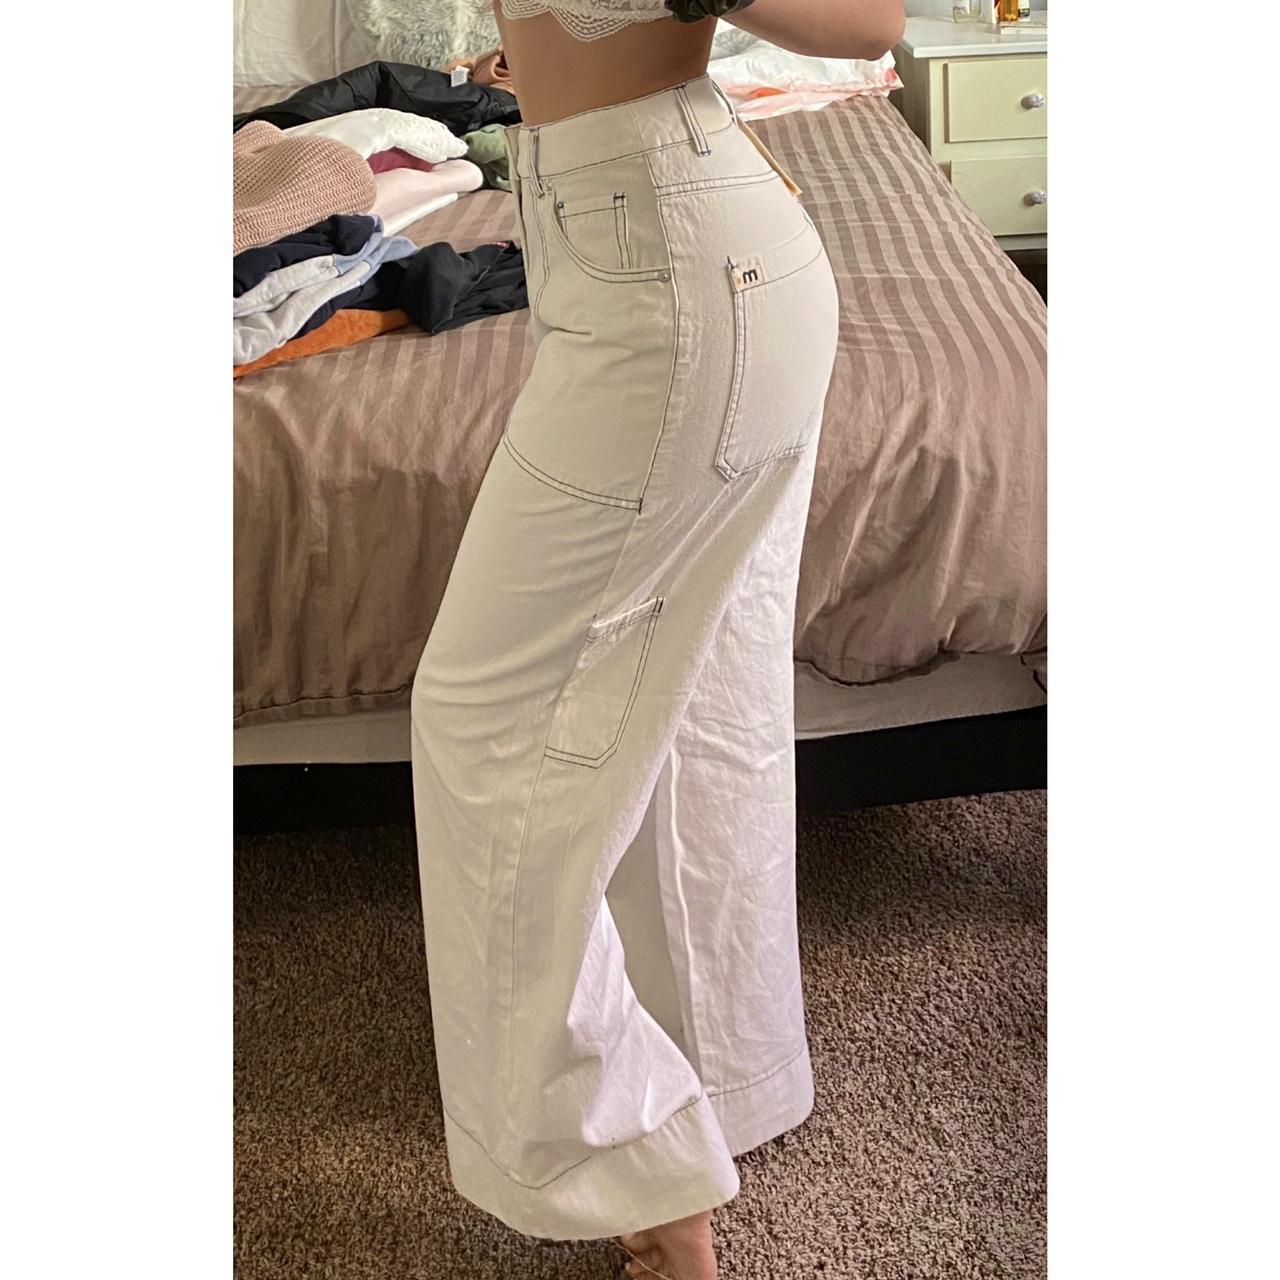 LF Markey  Women's White and Tan Jeans (2)